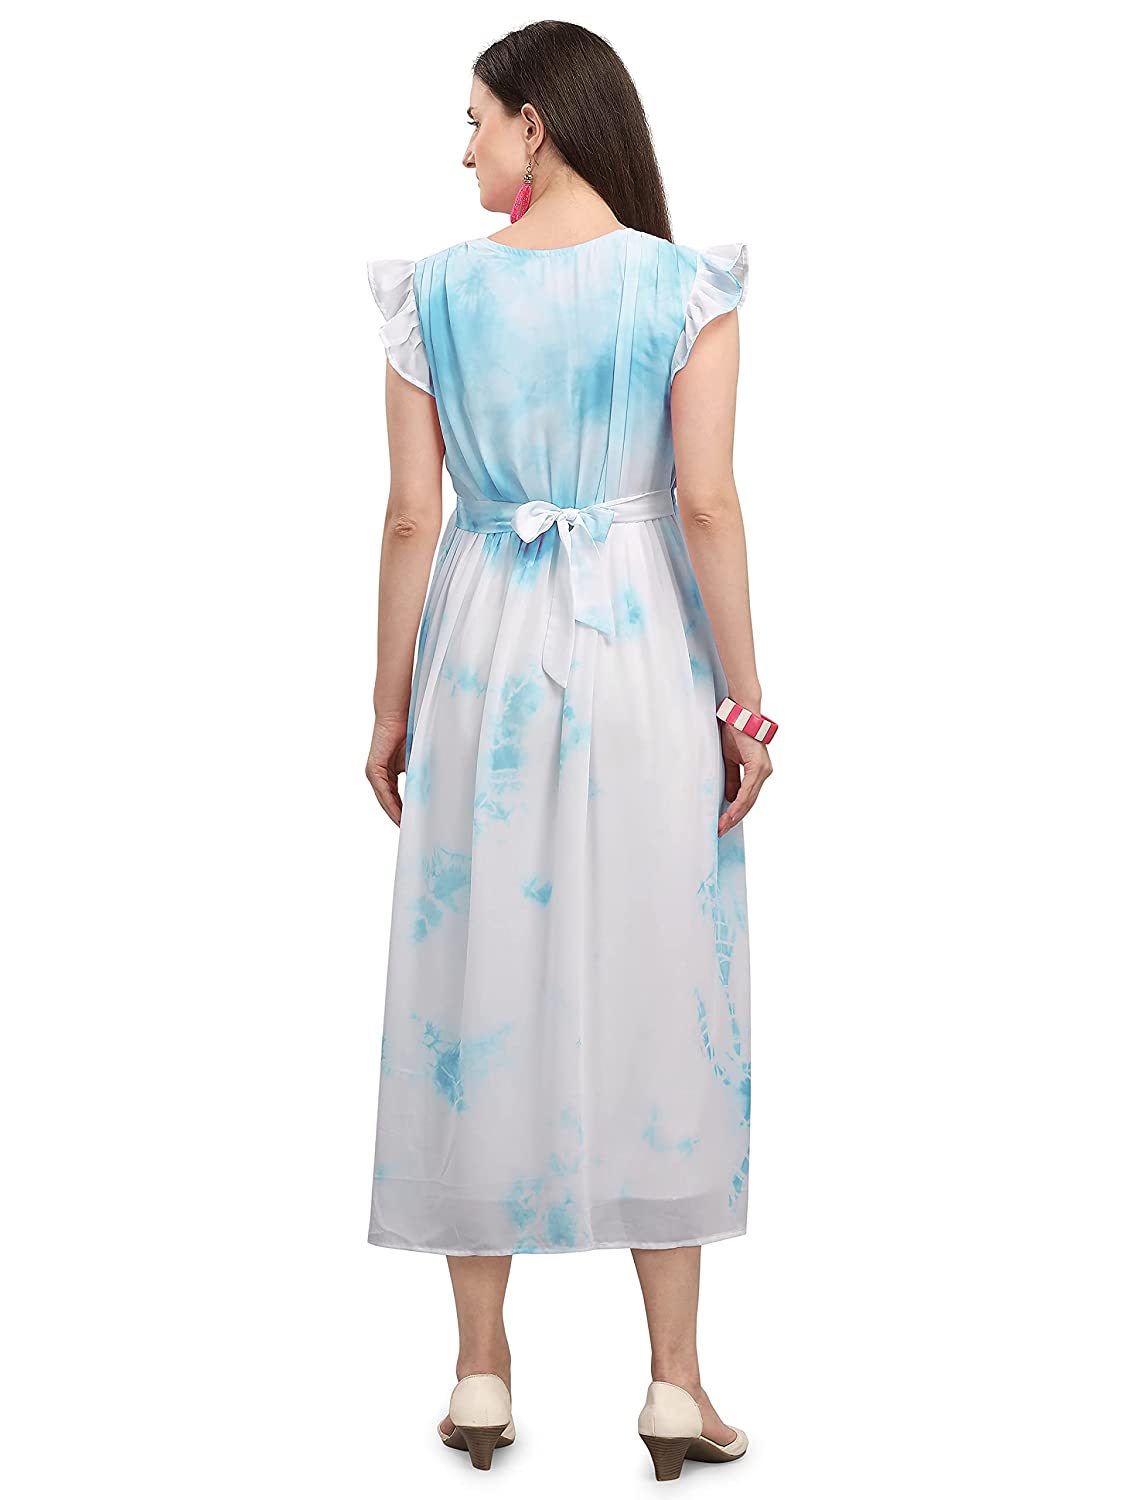 The Vendorvilla Tie-Dye Printed Long Flared Dress For Women